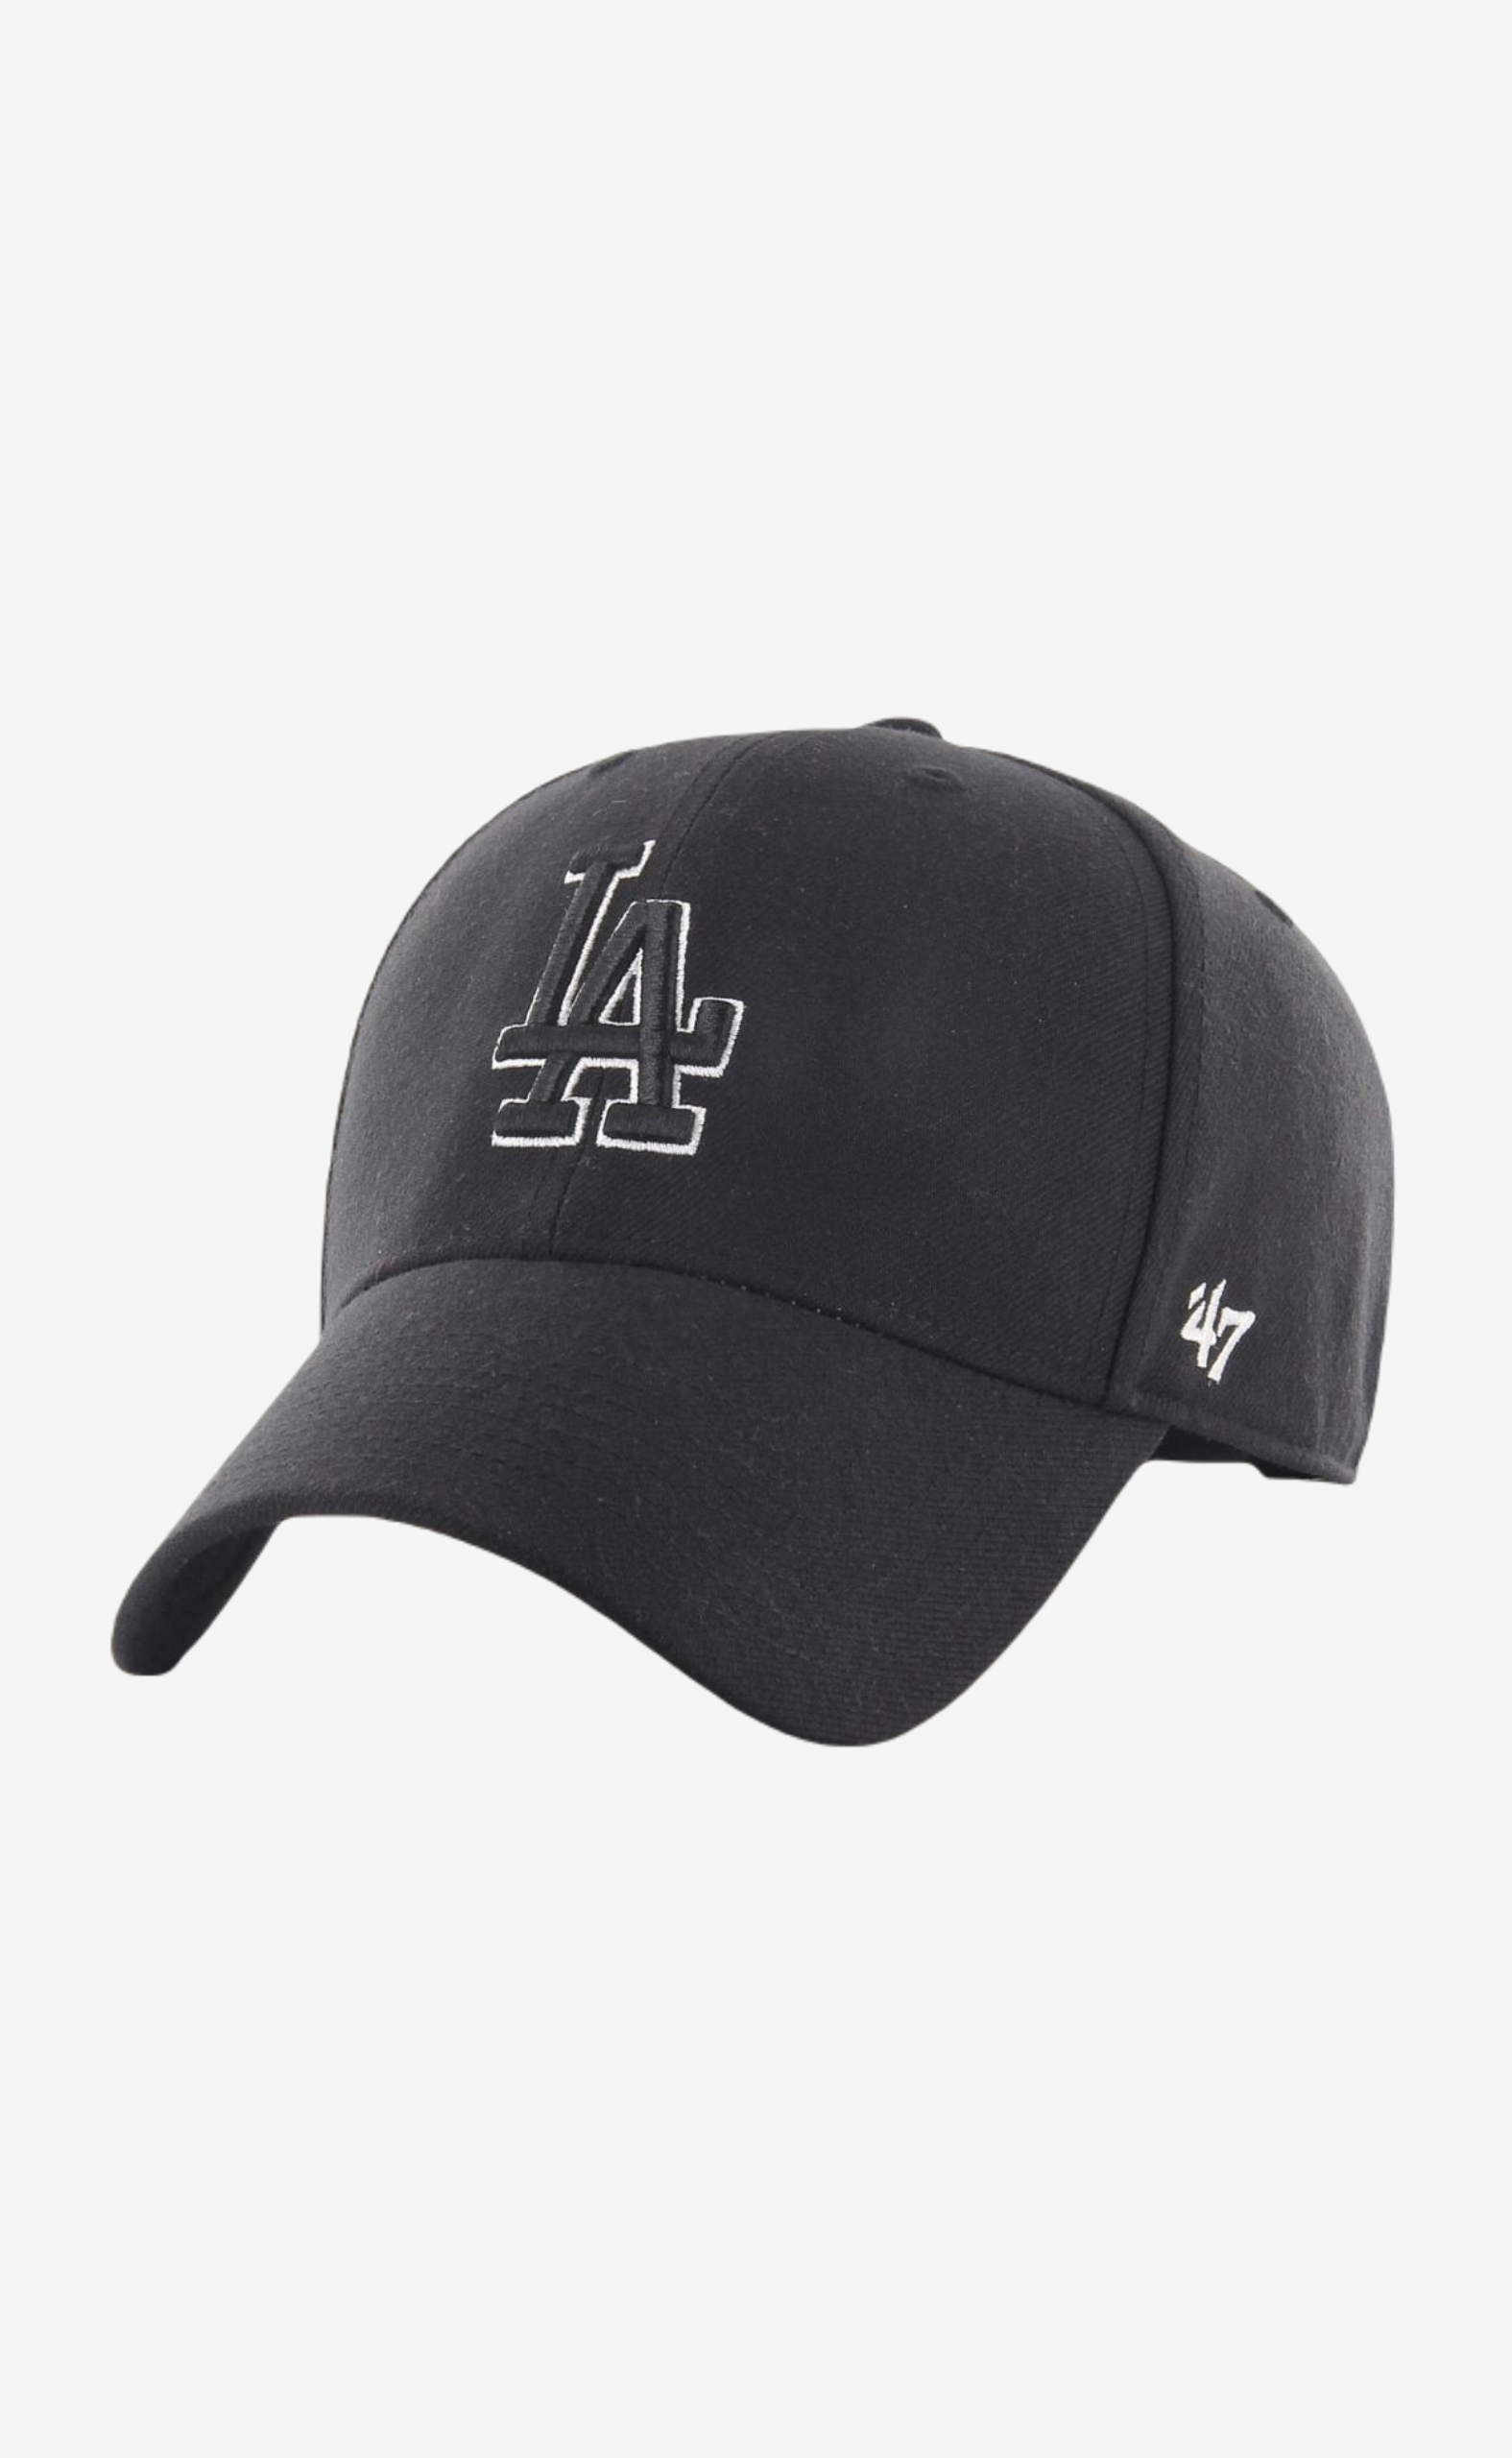 MLB LOS ANGELES DODGERS 47 MVP BLACK HAT